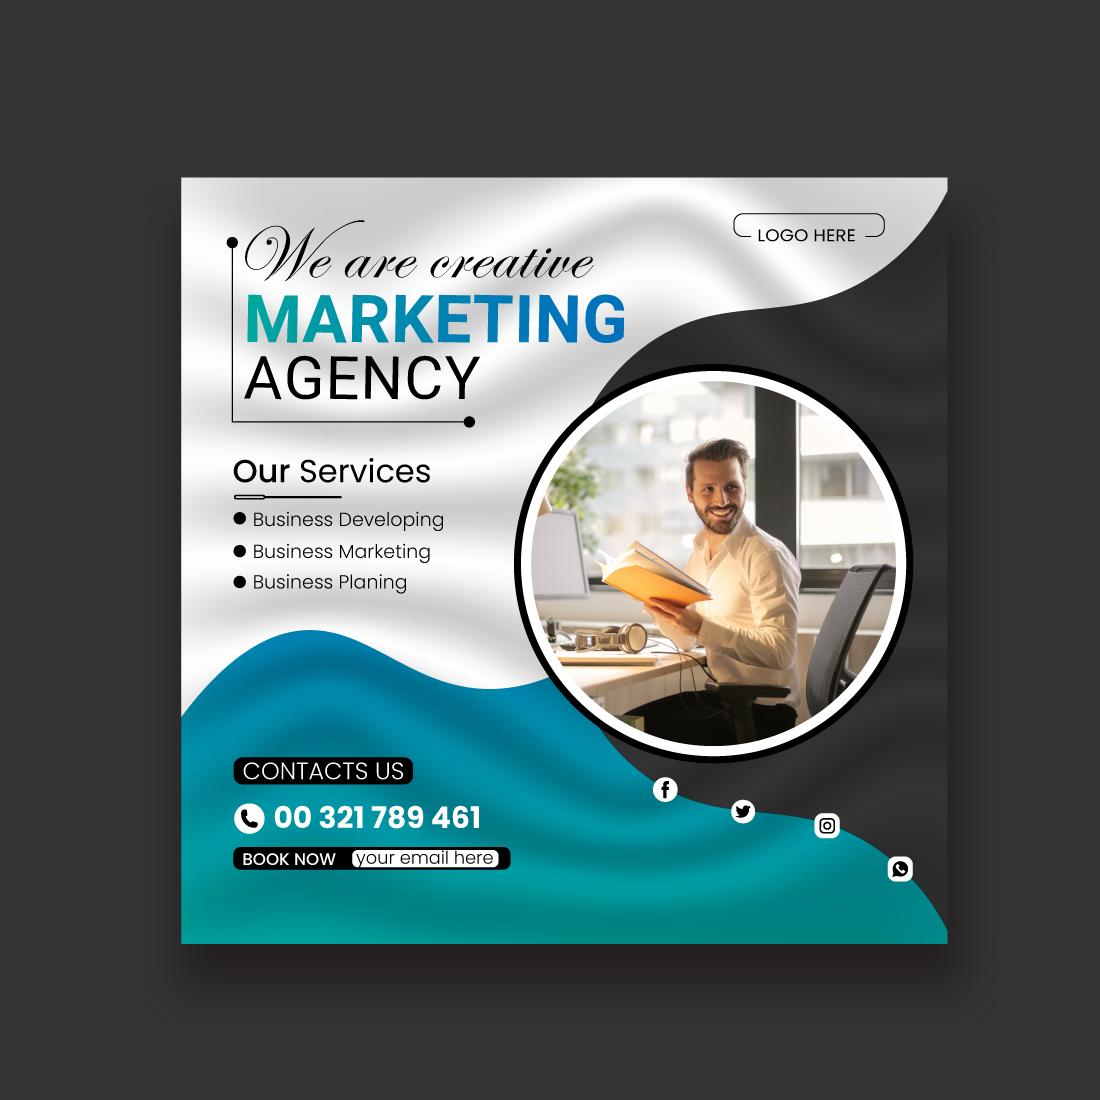 Digital Marketing Agency, Advertising Company